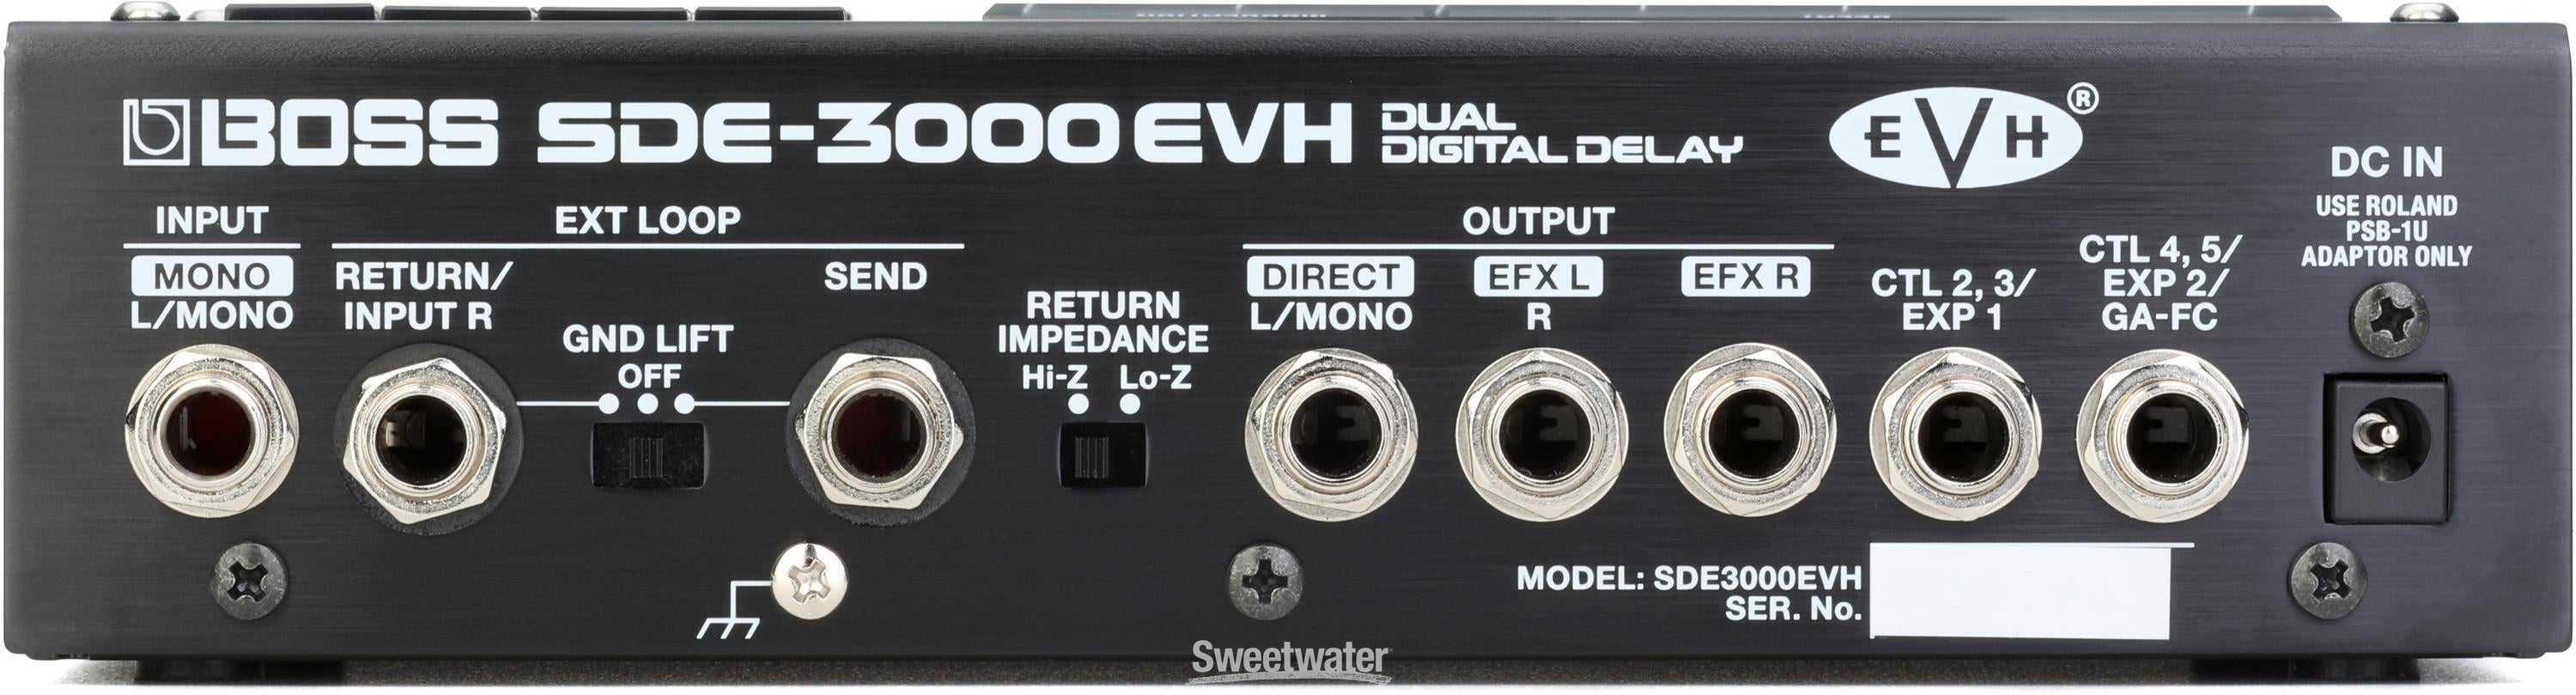 Boss SDE-3000EVH Dual Digital Delay Pedal | Sweetwater